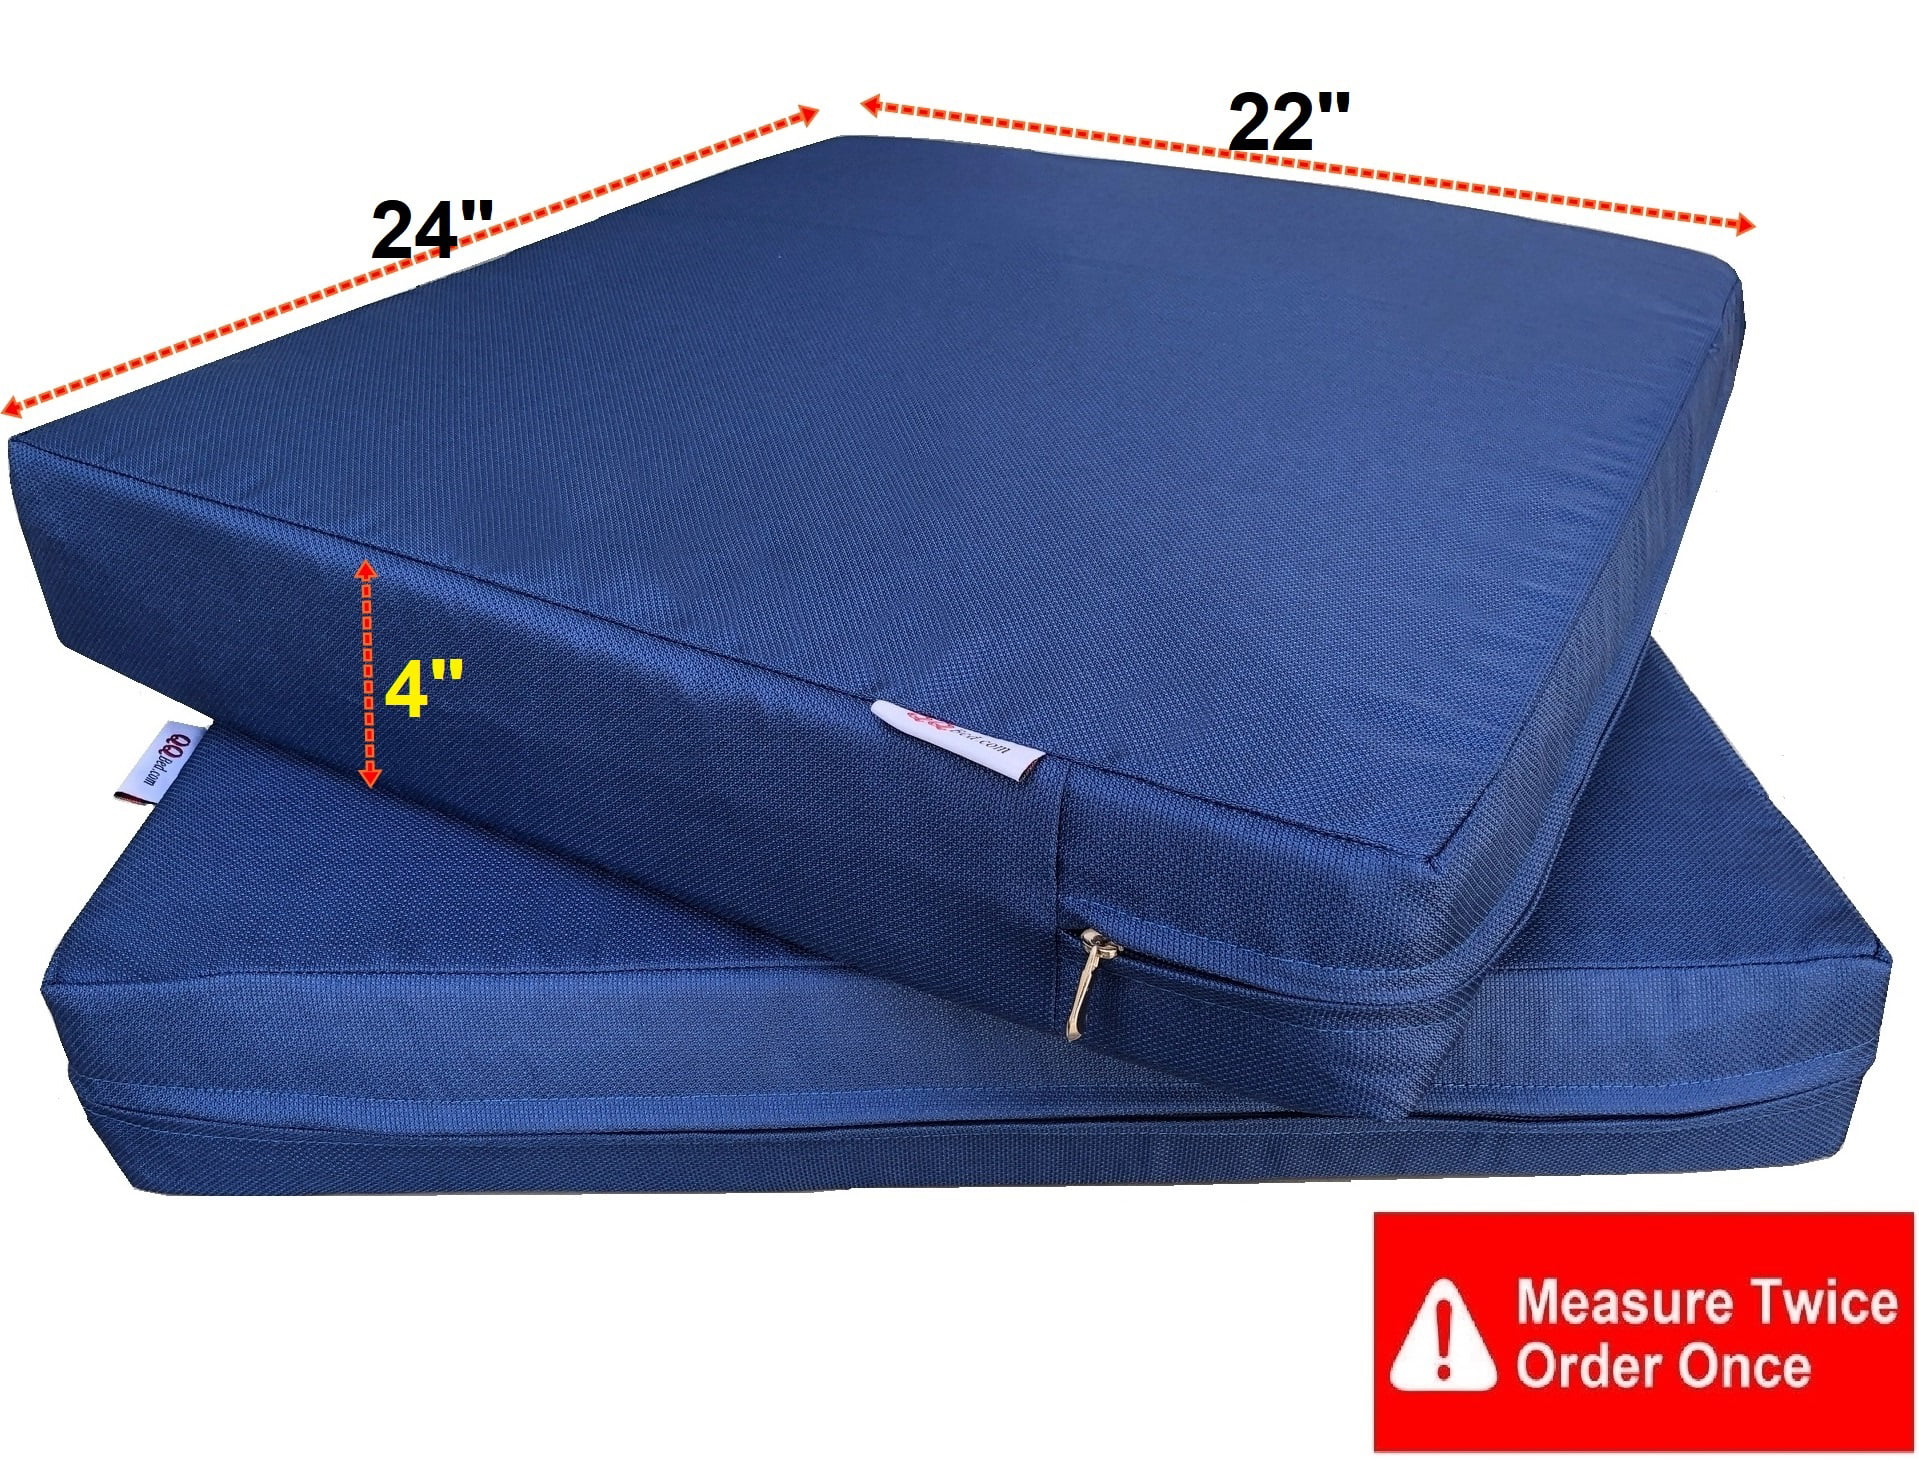 30x30x2 Fiber Foam Cushion, Patio & Marine Cushion Alternative